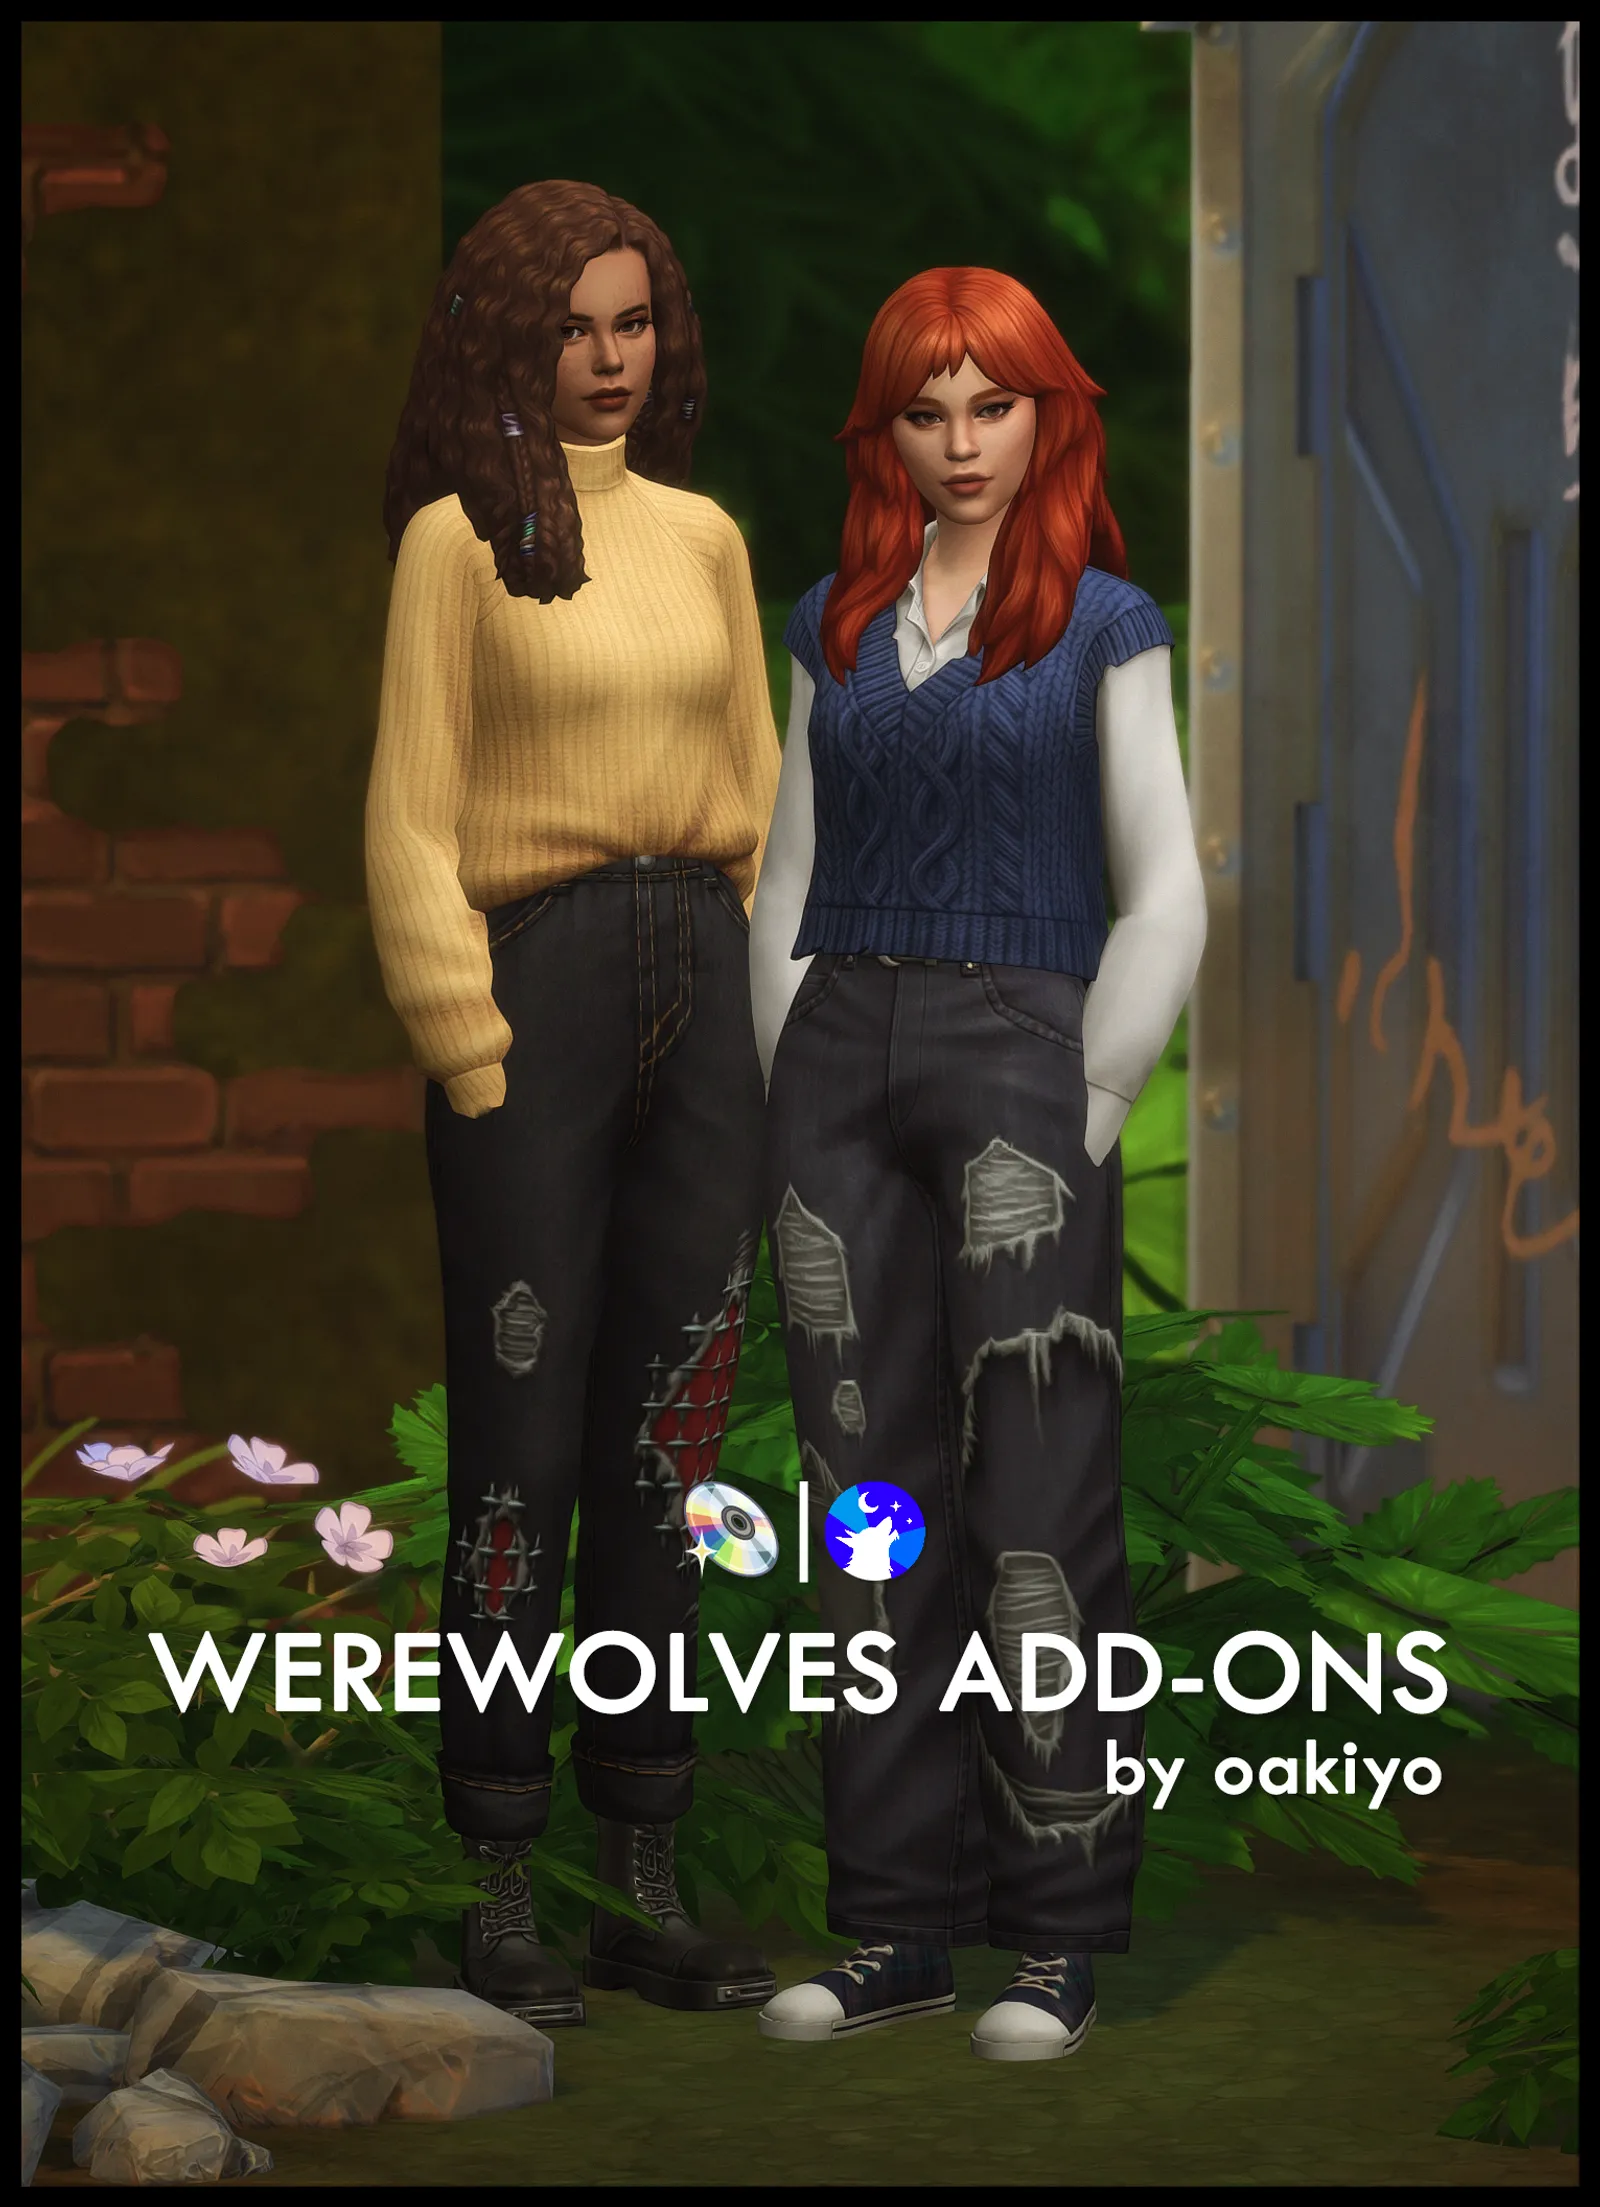 Werewolves Add-ons: